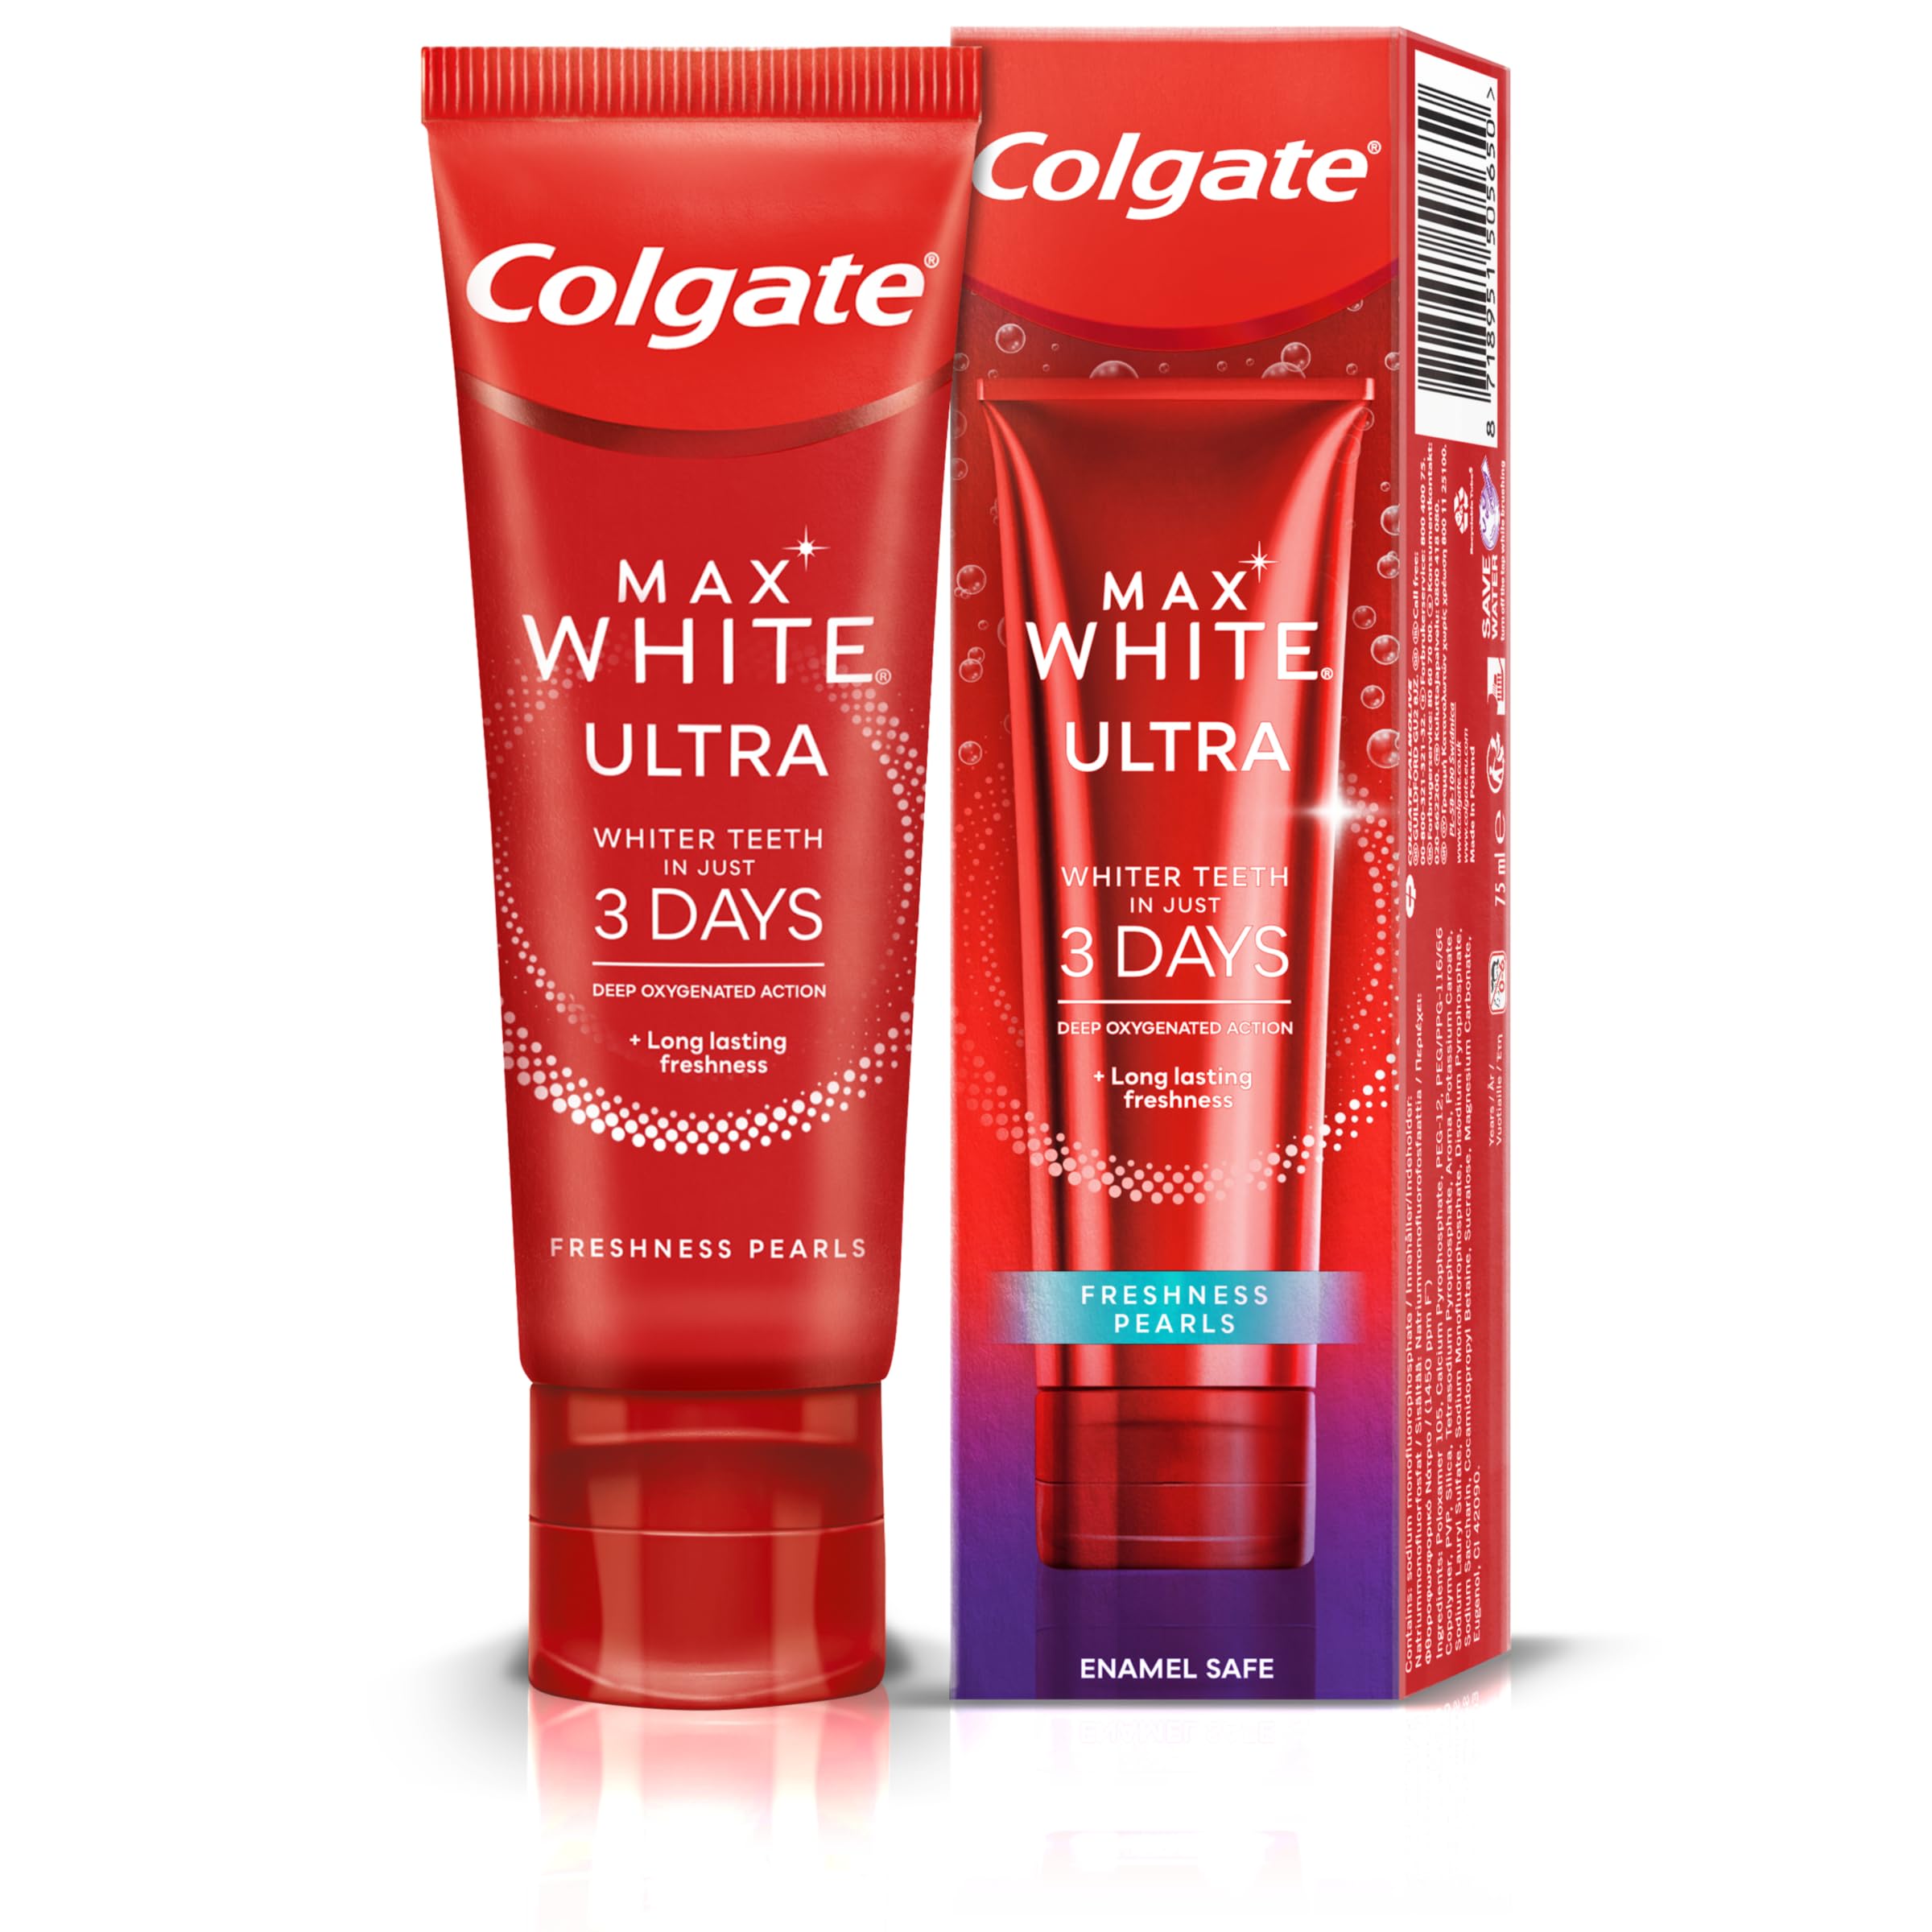 Colgate Max White Ultra Freshness Pearls Teeth Whitening Toothpaste 75ml  whiter teeth in 3 days*